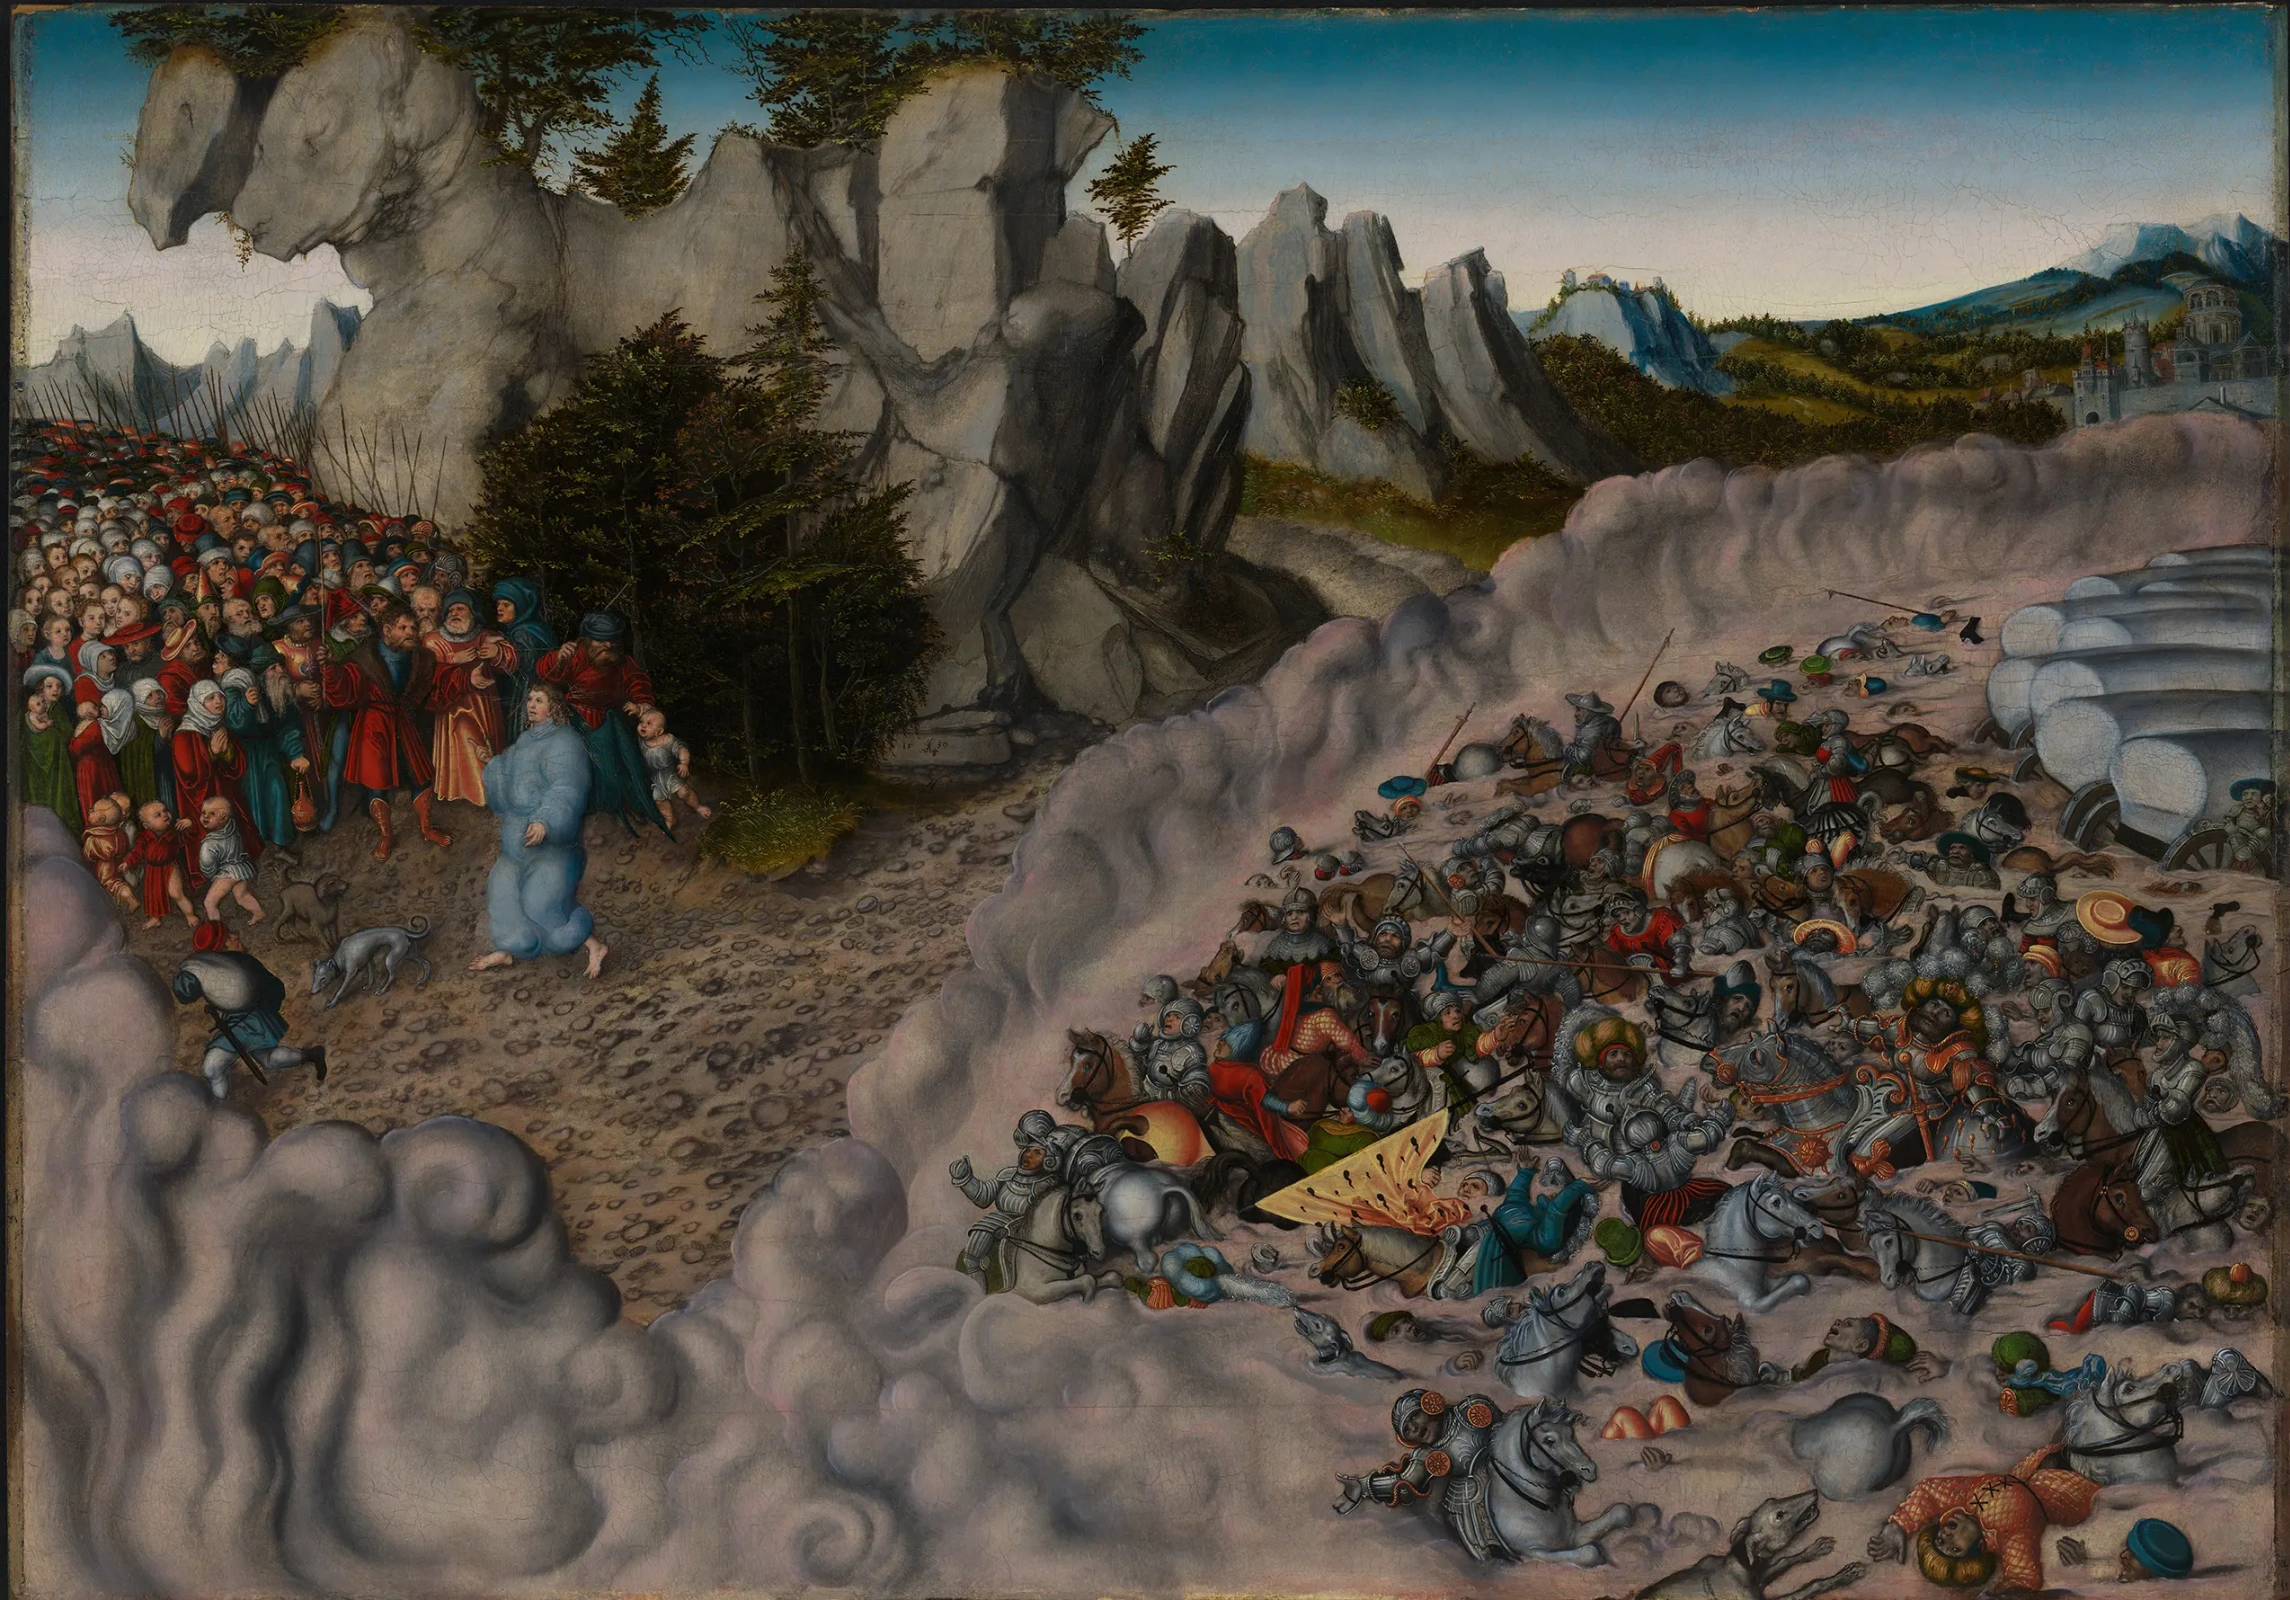 Art and Devotion of the German Reformation Lucas Cranach the Elder